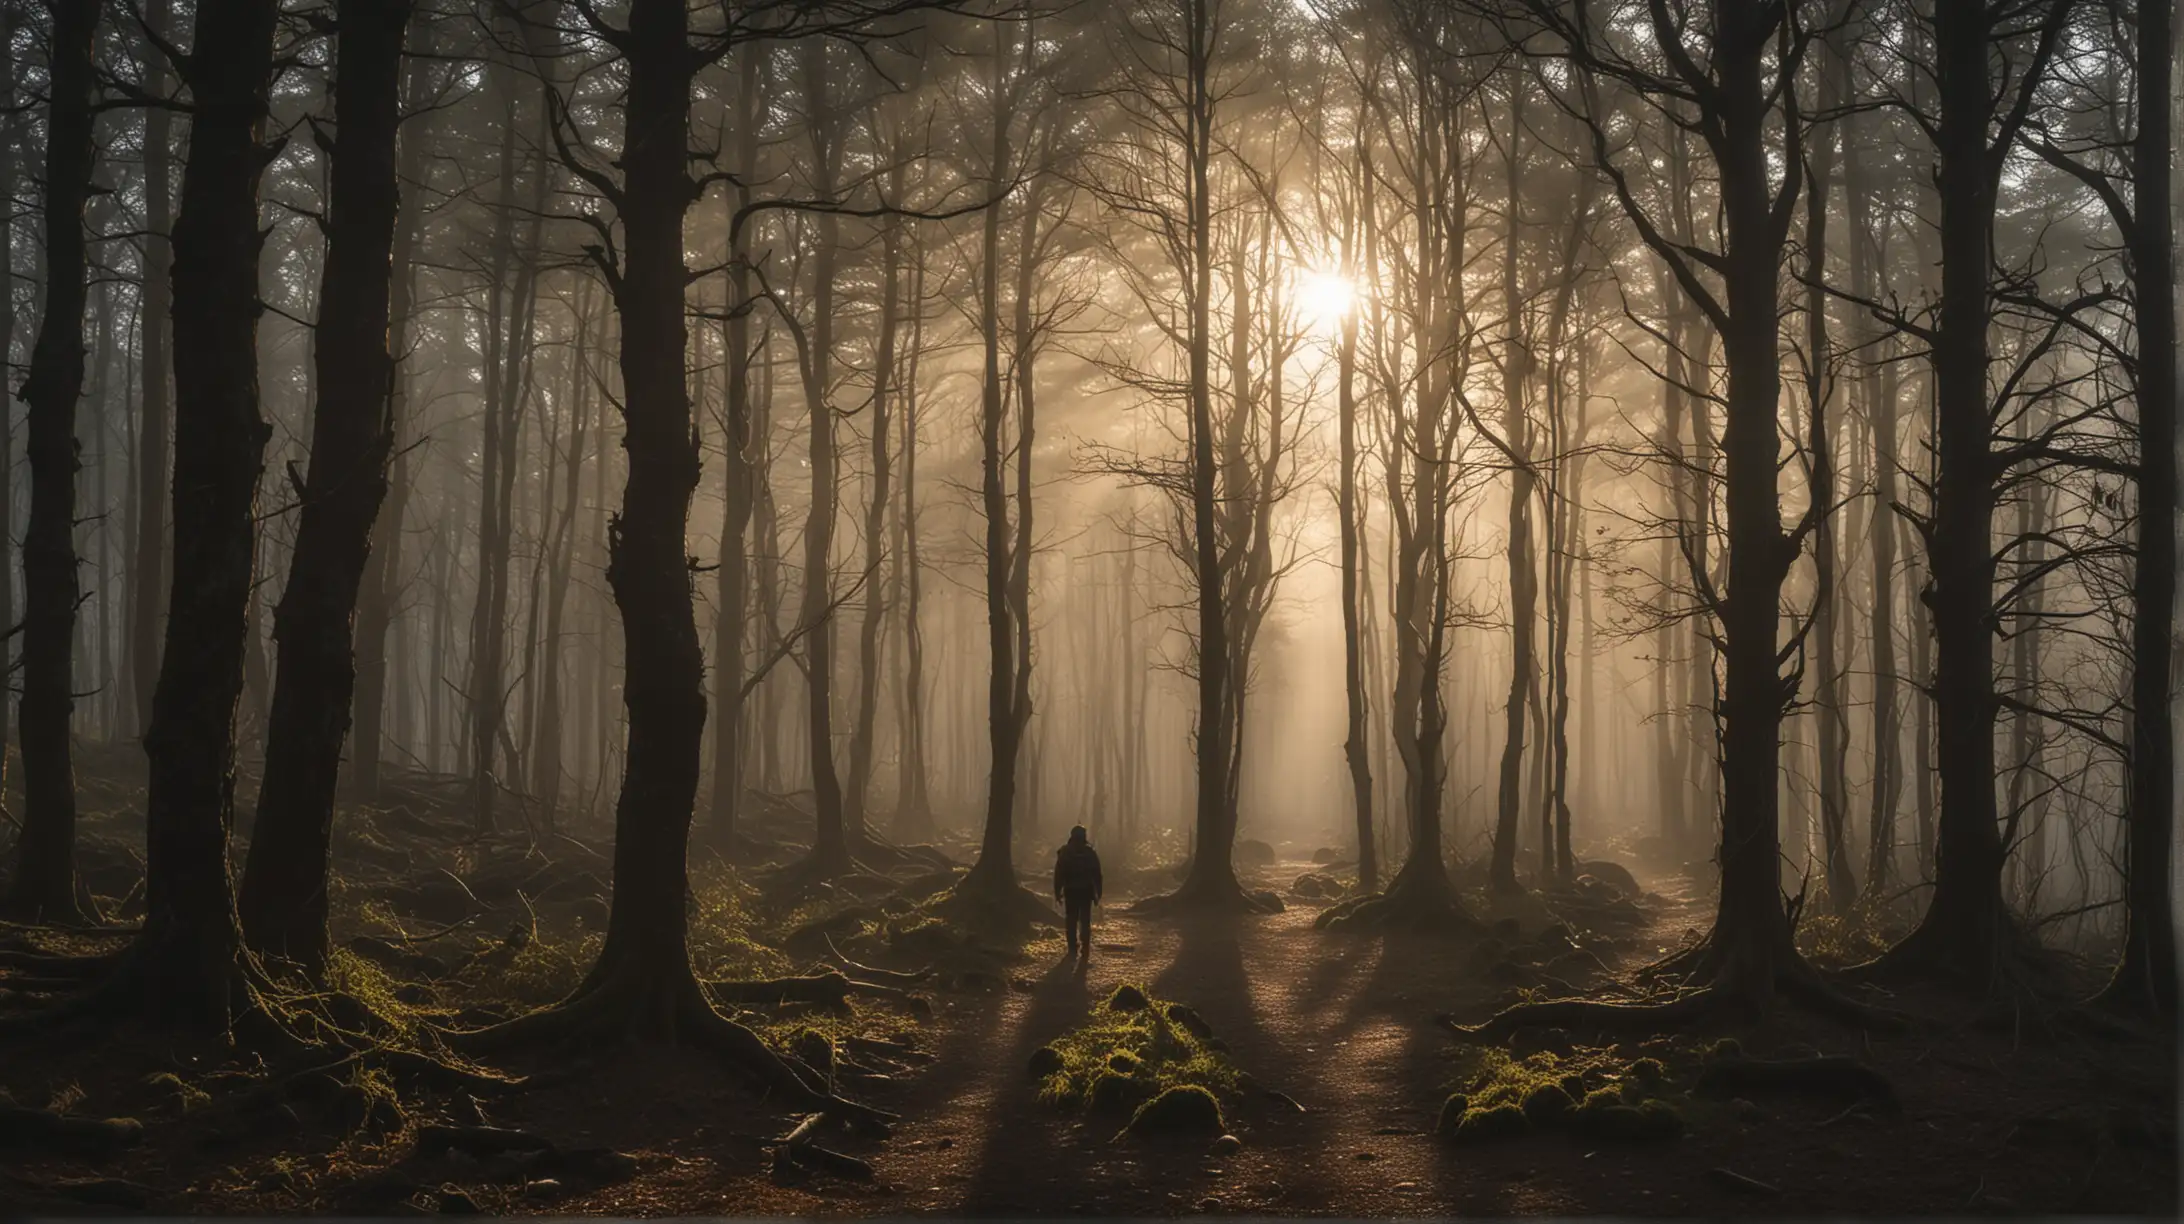 Hiker Contemplates Mystical Forest at Dusk